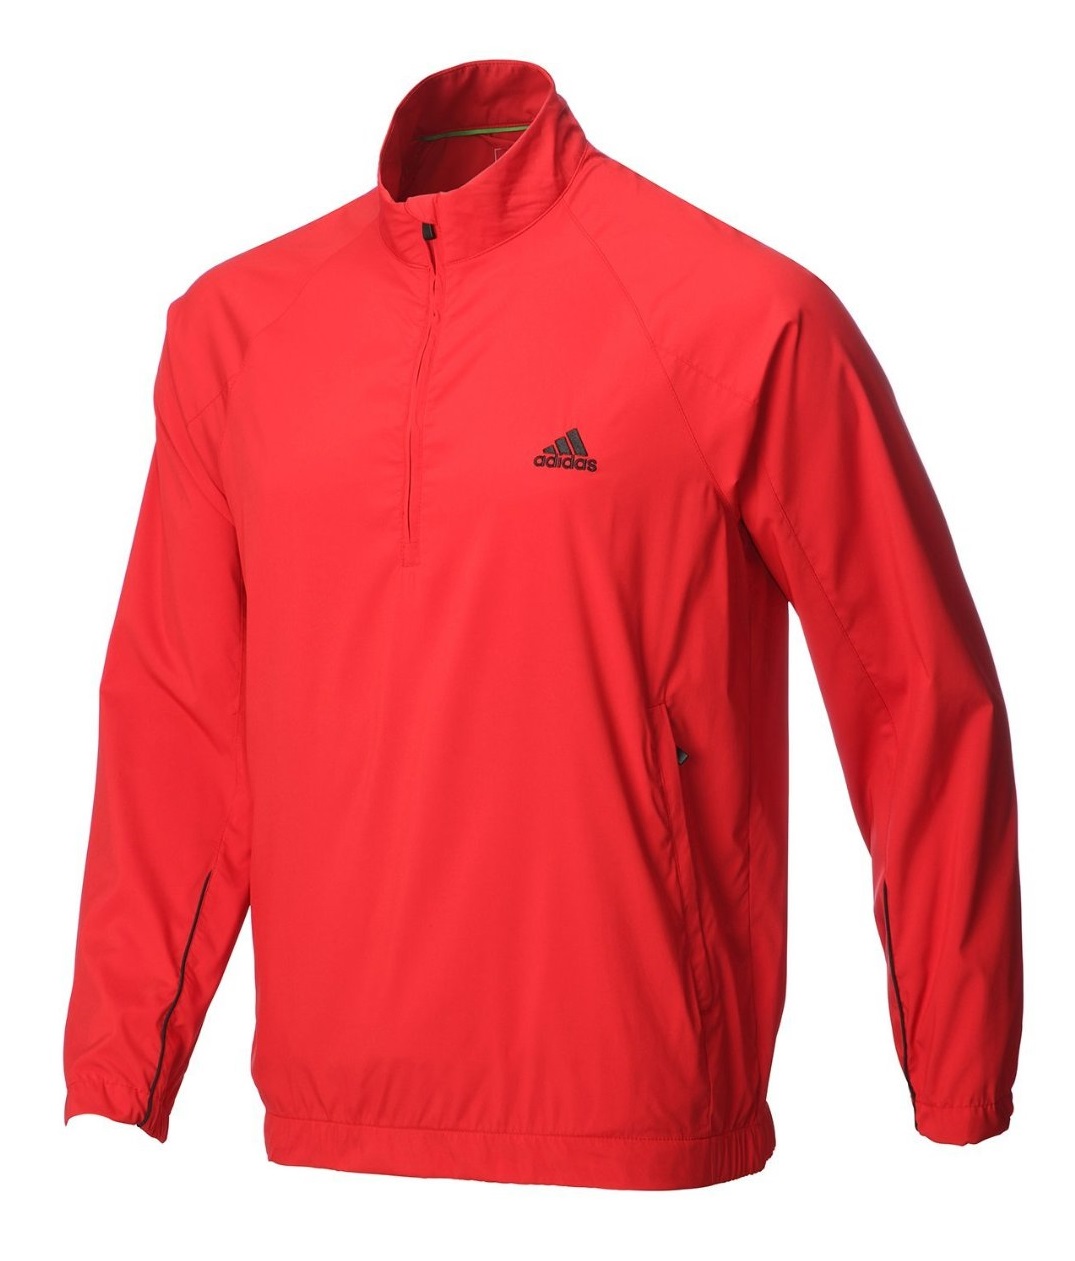 Adidas Full Sleeve Golf Windshirts